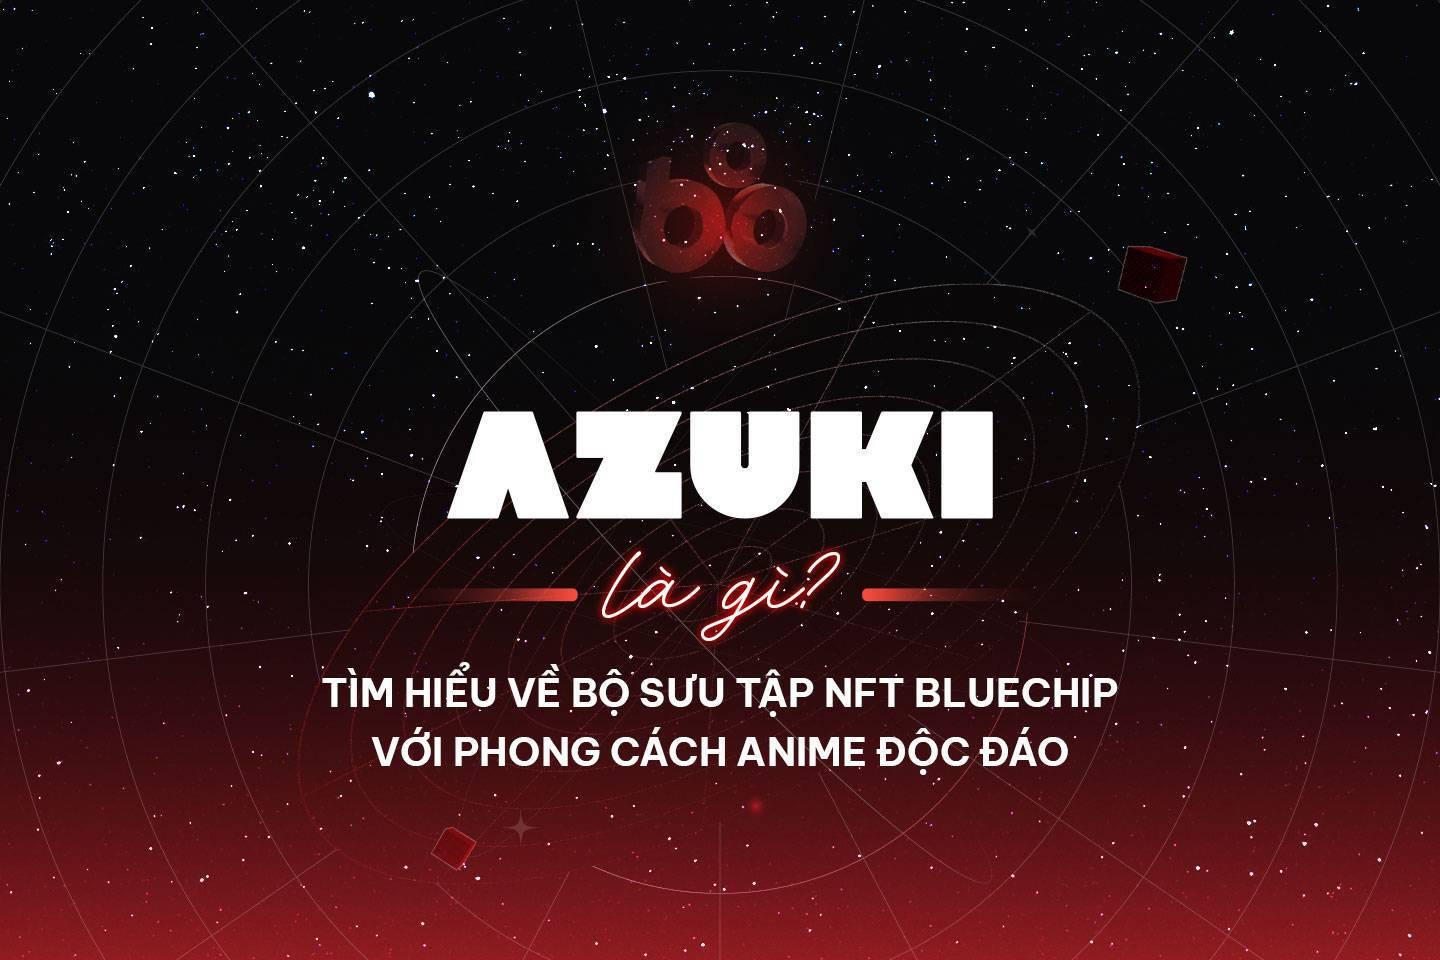 azuki-la-gi-tim-hieu-ve-bo-suu-tap-nft-bluechip-voi-phong-cach-anime-doc-dao